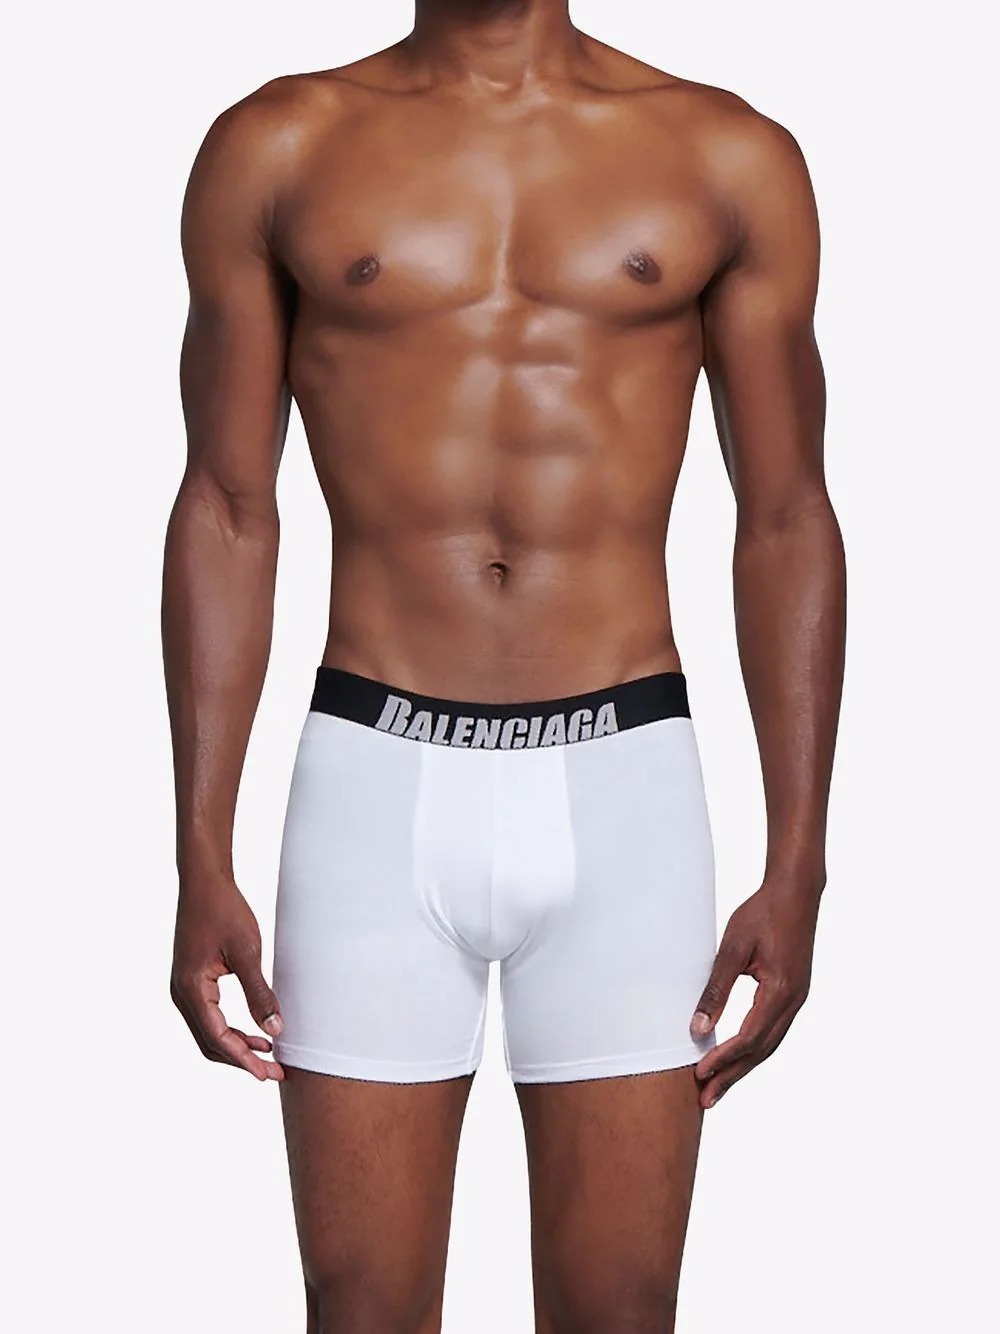 Mens Underwear Balenciaga, Style code: 657391-4a8b8-9000